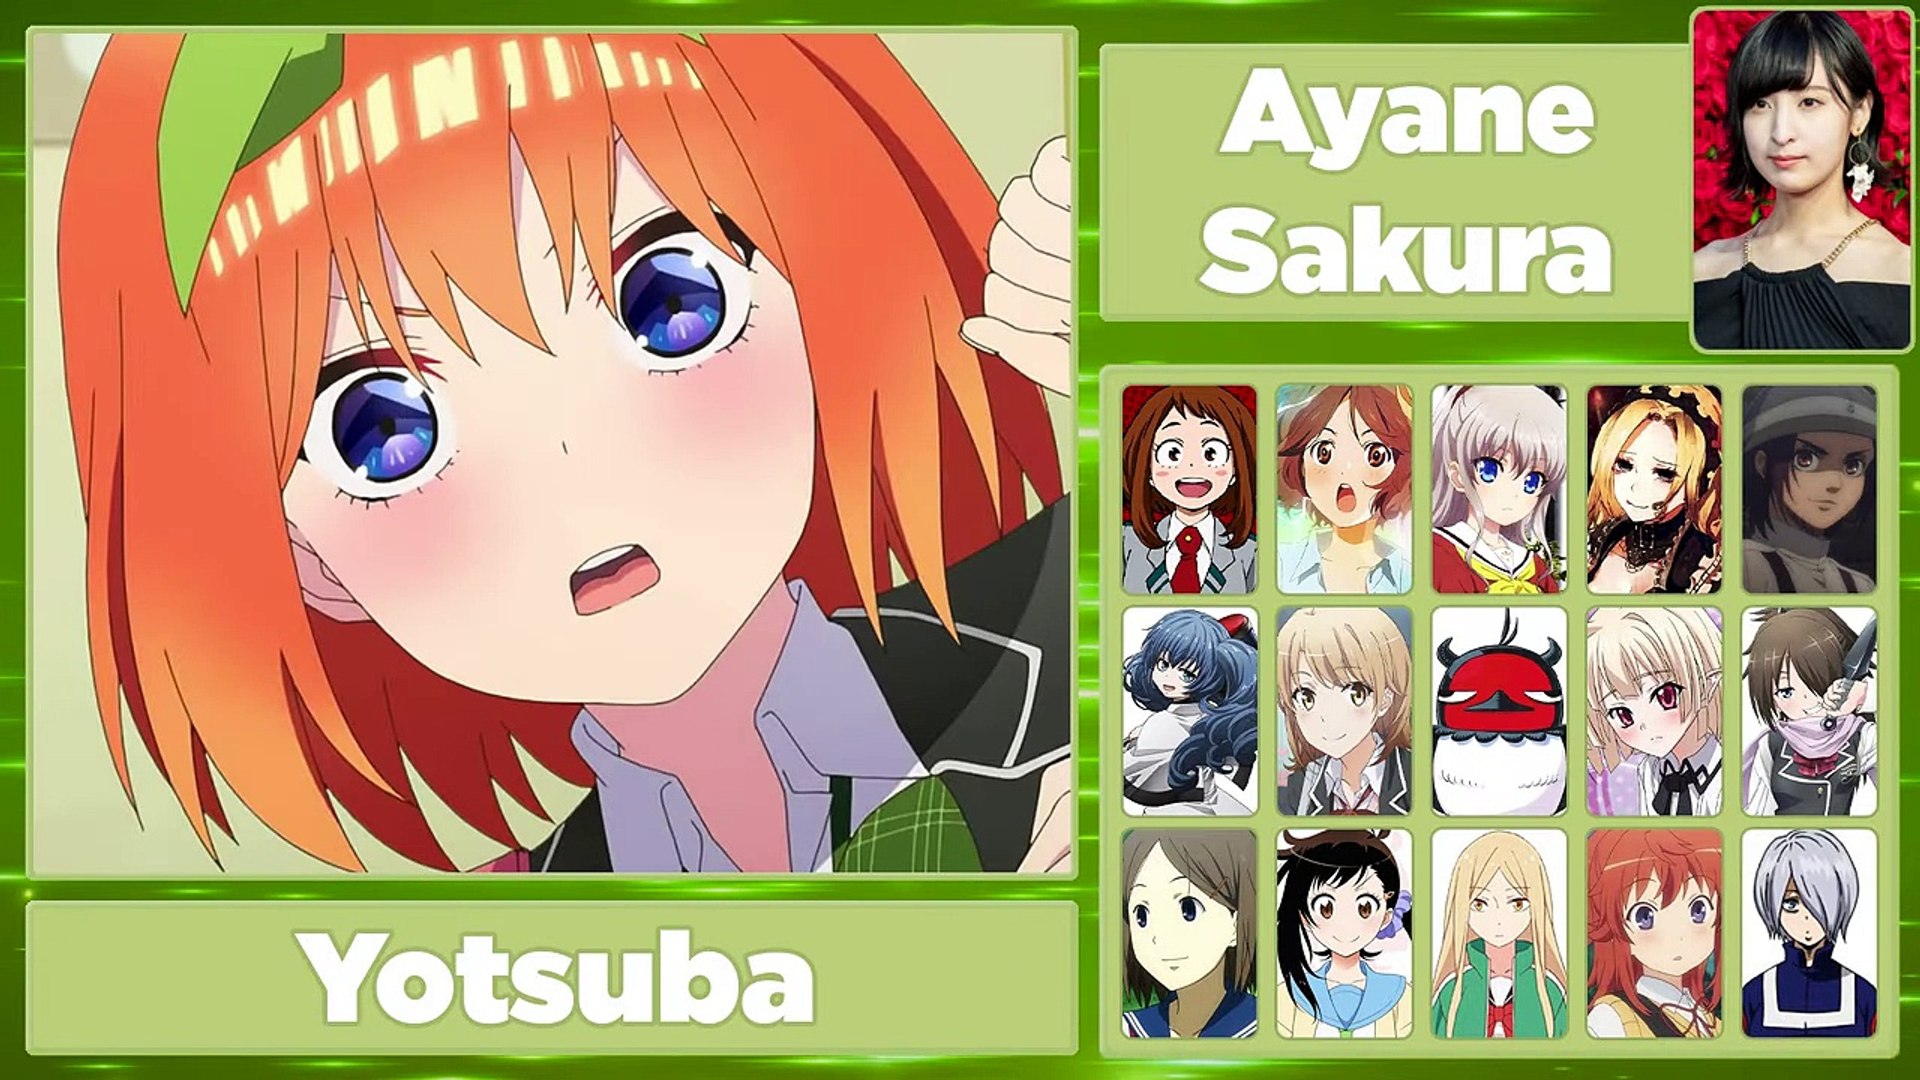 Go-Toubun no Hanayome Voice Actors & Same Voice in Anime